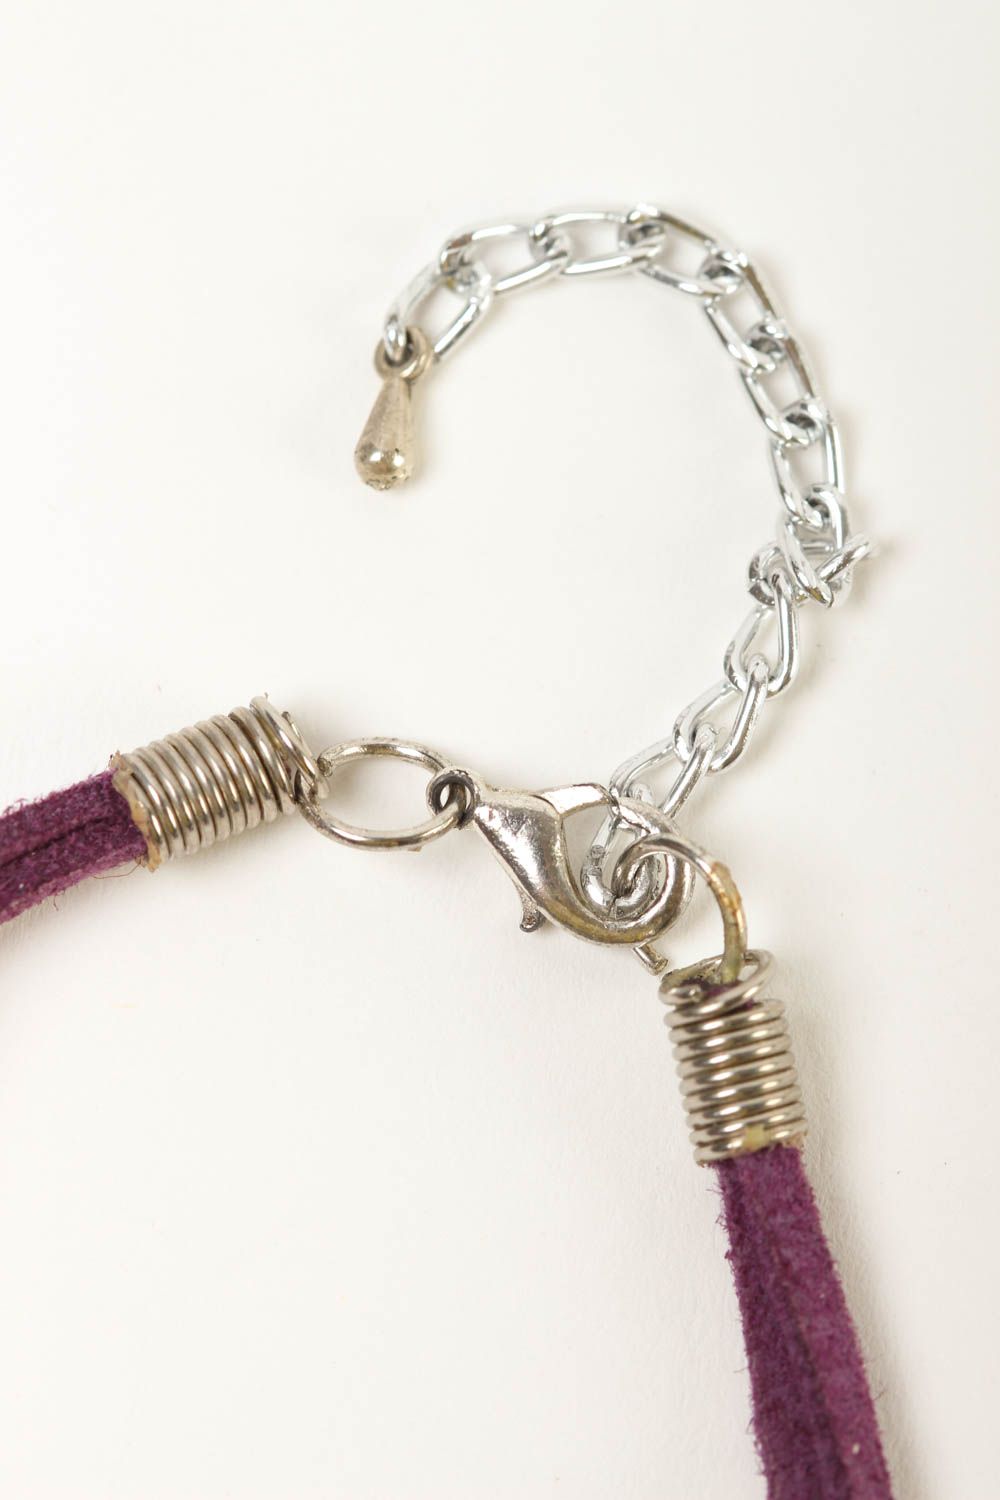 Handmade leather bracelet wrist bracelet with charms artisan jewelry designs photo 3